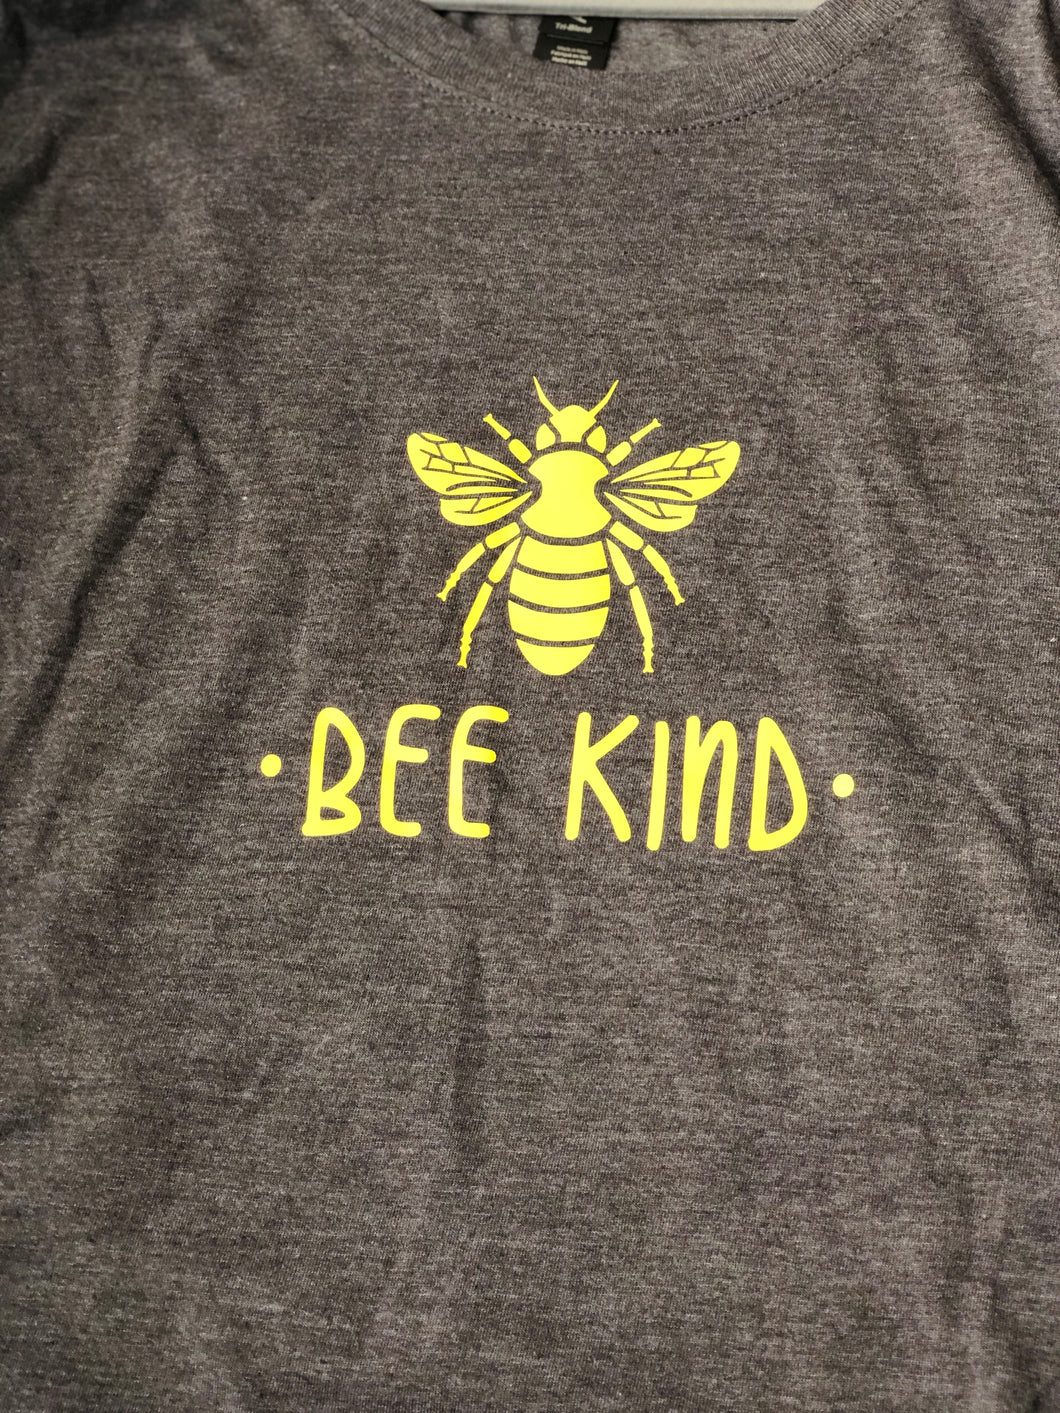 Adult - Bee Kind (large) Clearance